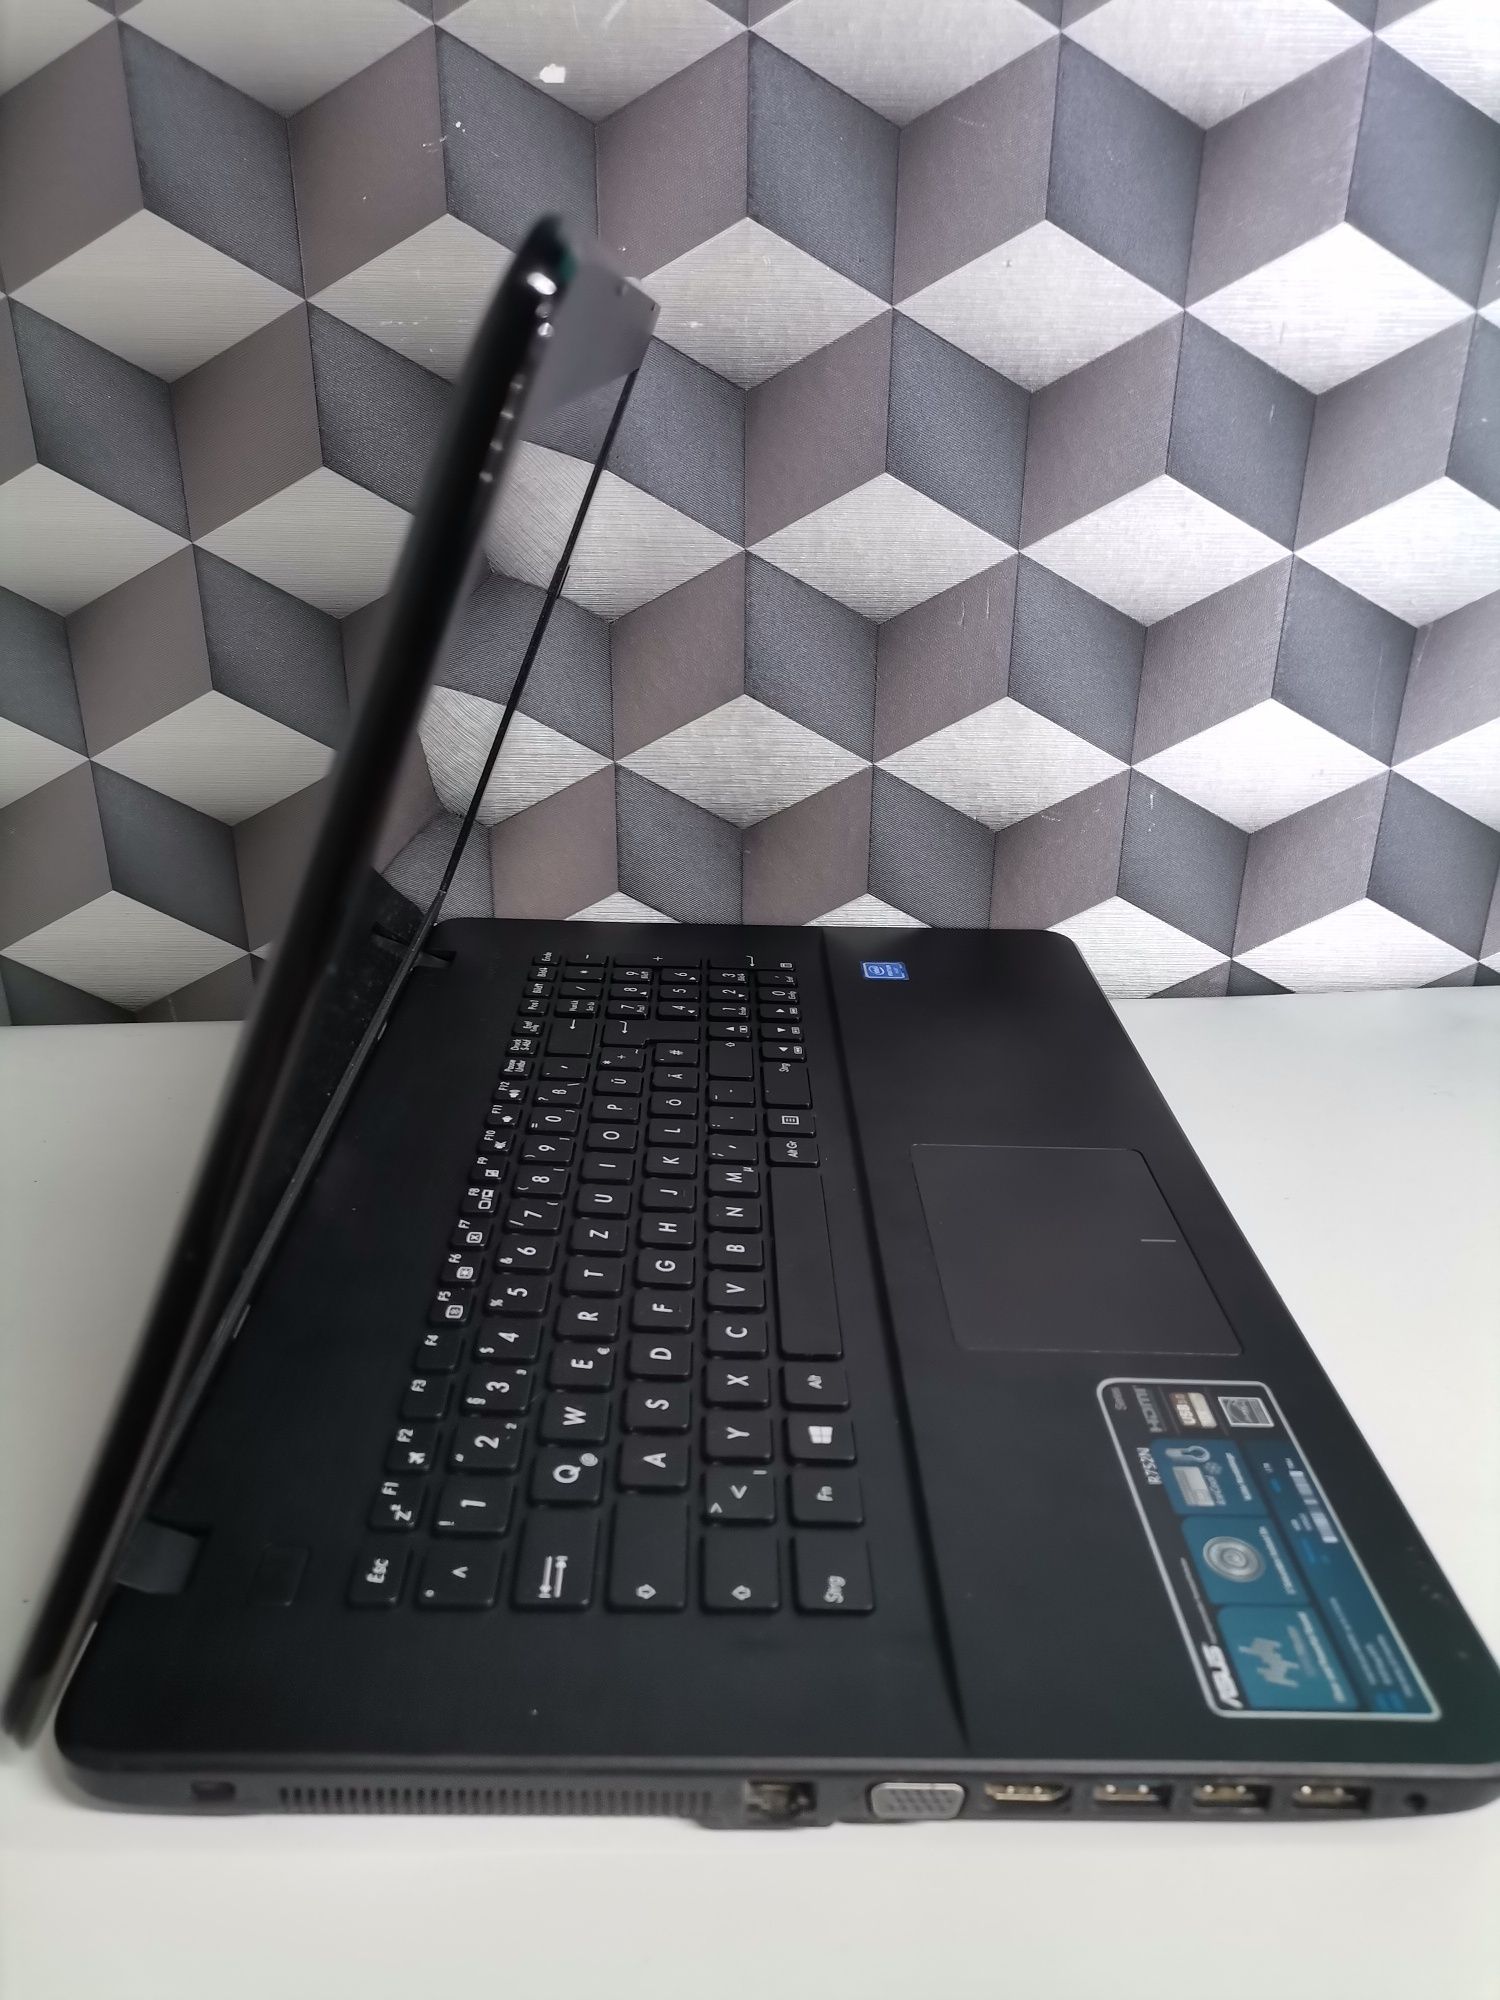 Laptop office Asus 17 inch model x751m